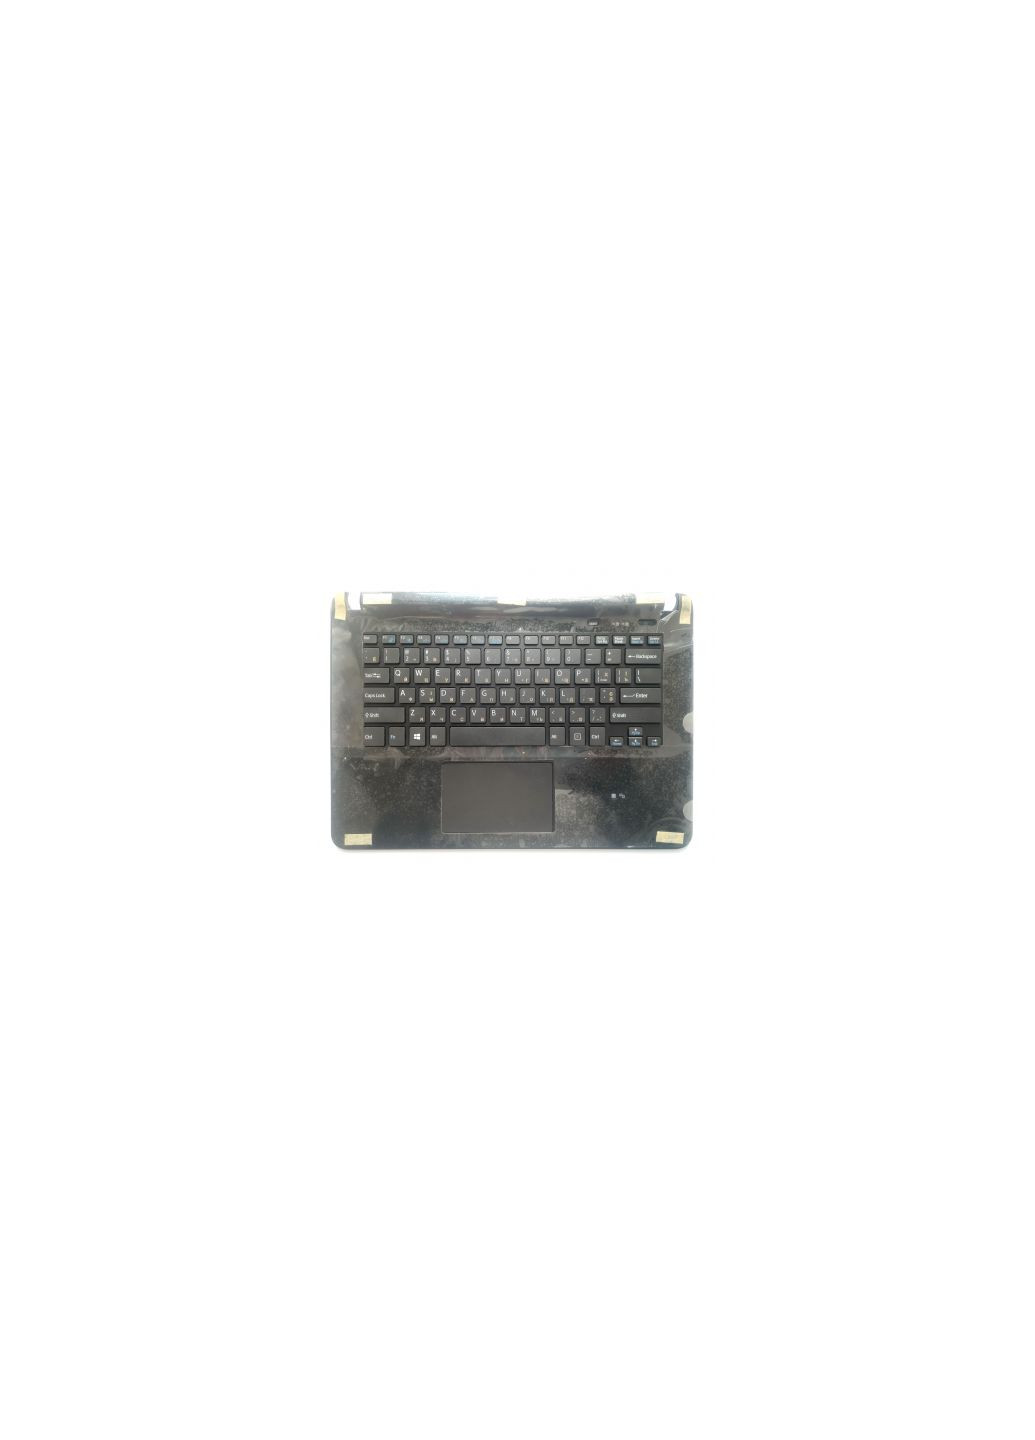 Клавиатура ноутбука Vaio SVF142A,SVF143A (Fit 14) black,UA/US,black,frame,TP (A46013) Sony vaio svf142a, svf143a (fit 14) black, ua/us, black, fr (276707386)